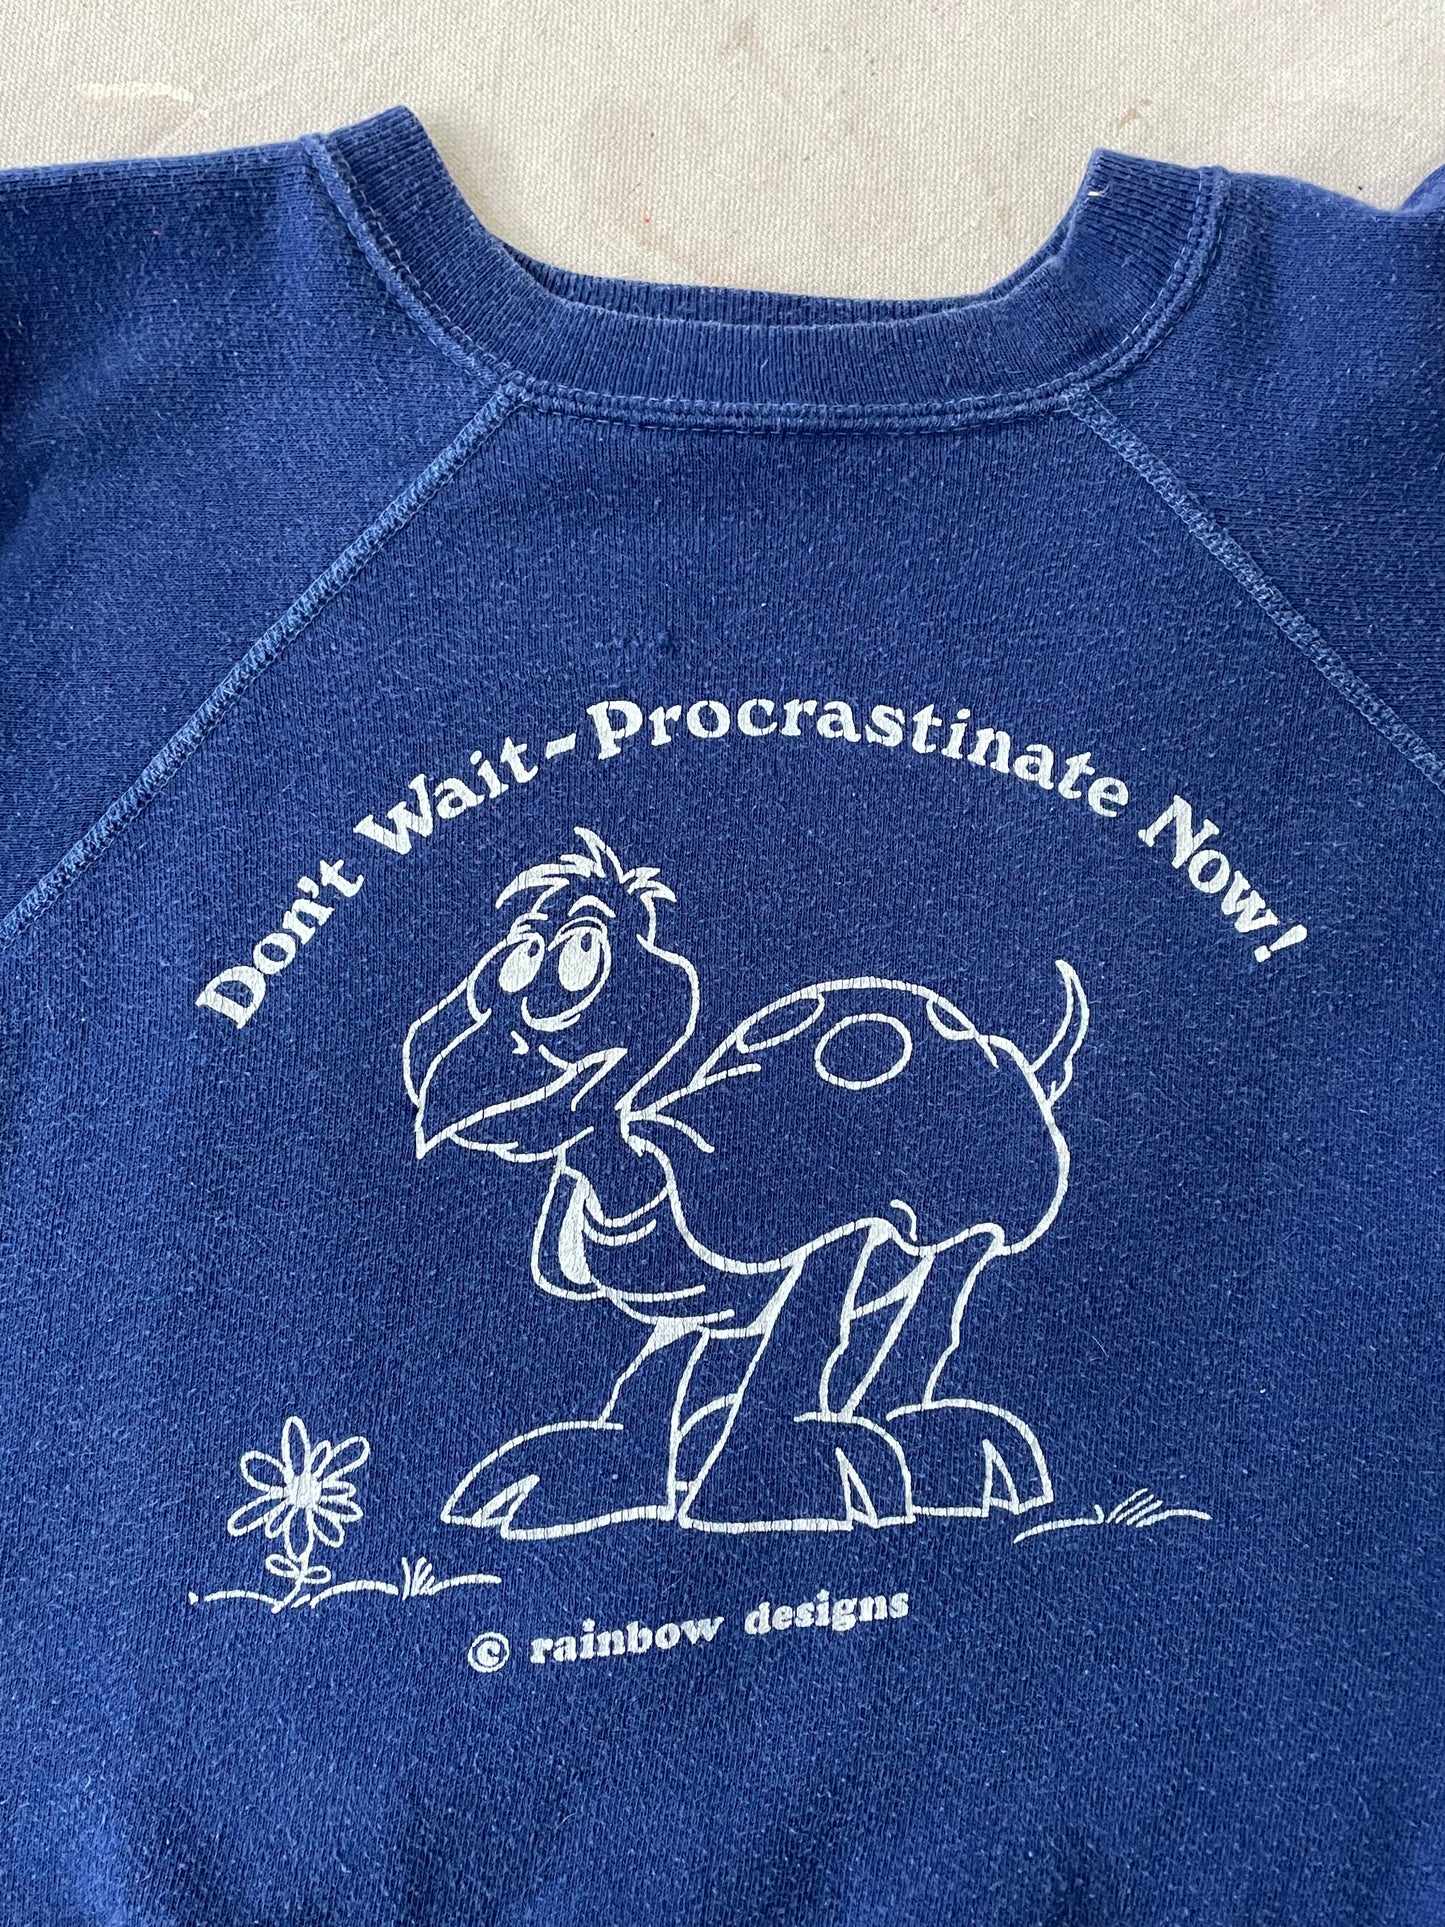 70s “Don’t Wait- Procrastinate Now!” Sweatshirt